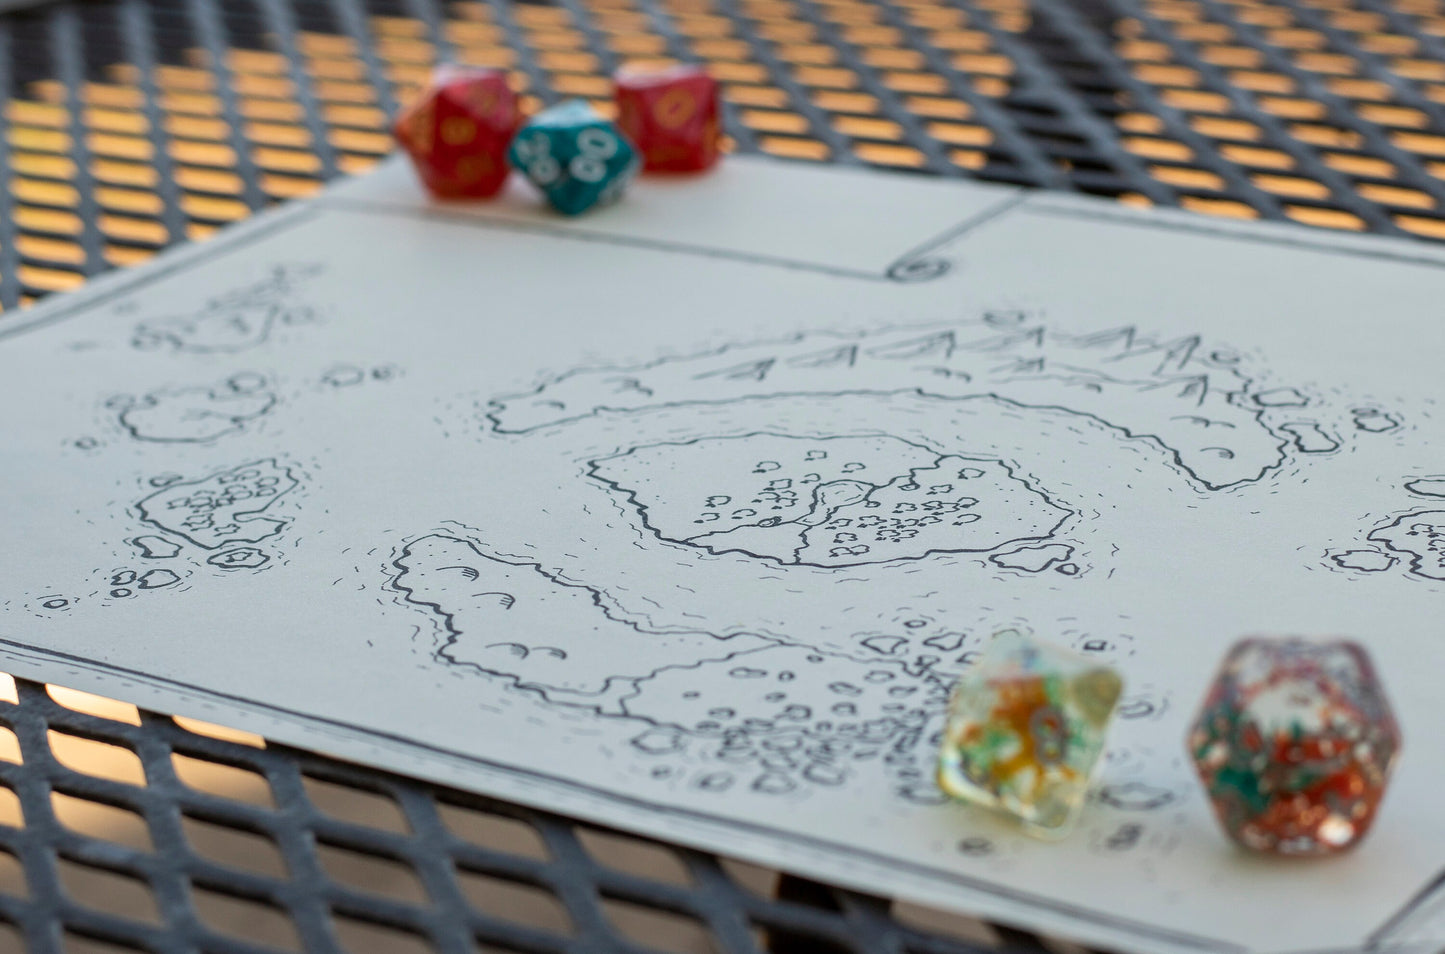 Blank Coastal Map - 8.5x11 inch Original Hand Drawn Fantasy Map for Dungeons & Dragons | Pathfinder | Tabletop RPG